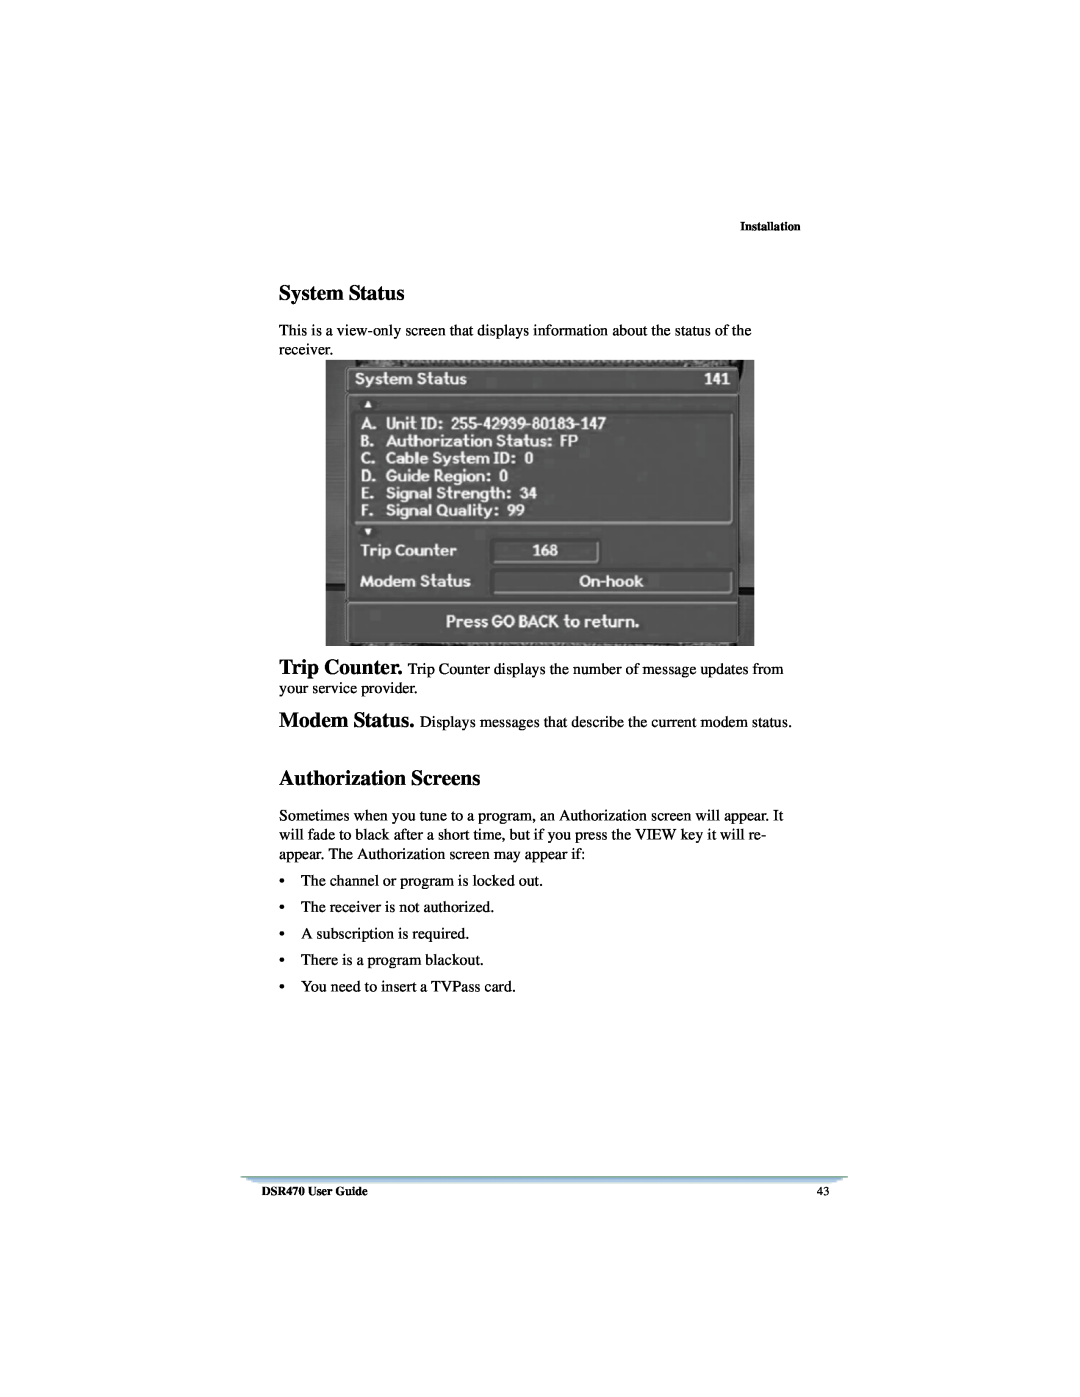 Univex DSR470 manual System Status, Authorization Screens 